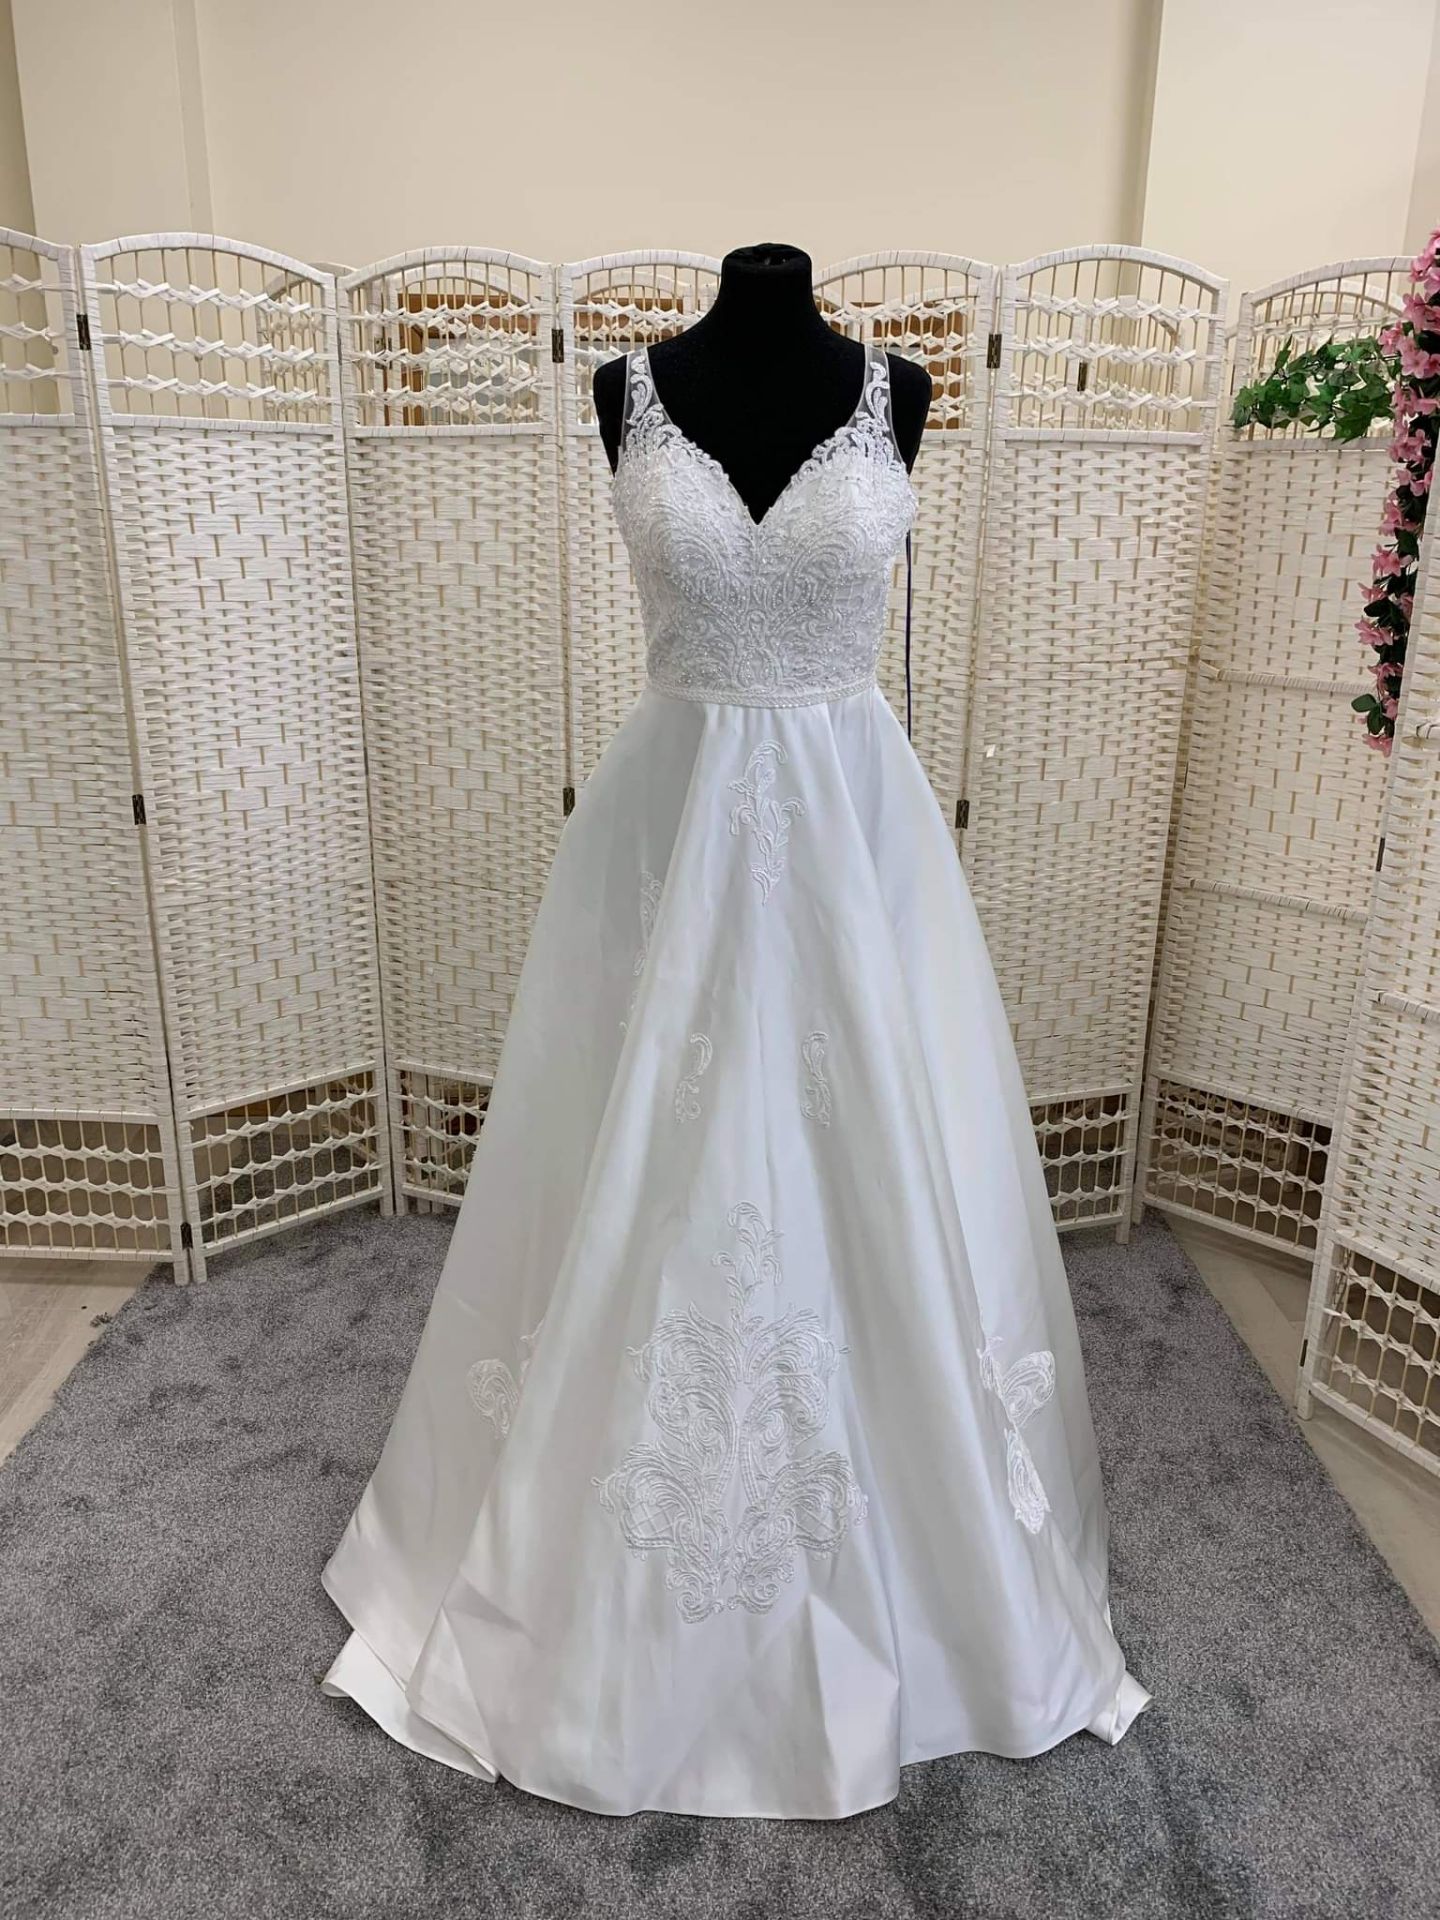 Ladybird Bridal wedding dress size 10 LB520028 RRP £1,495 - Image 8 of 10